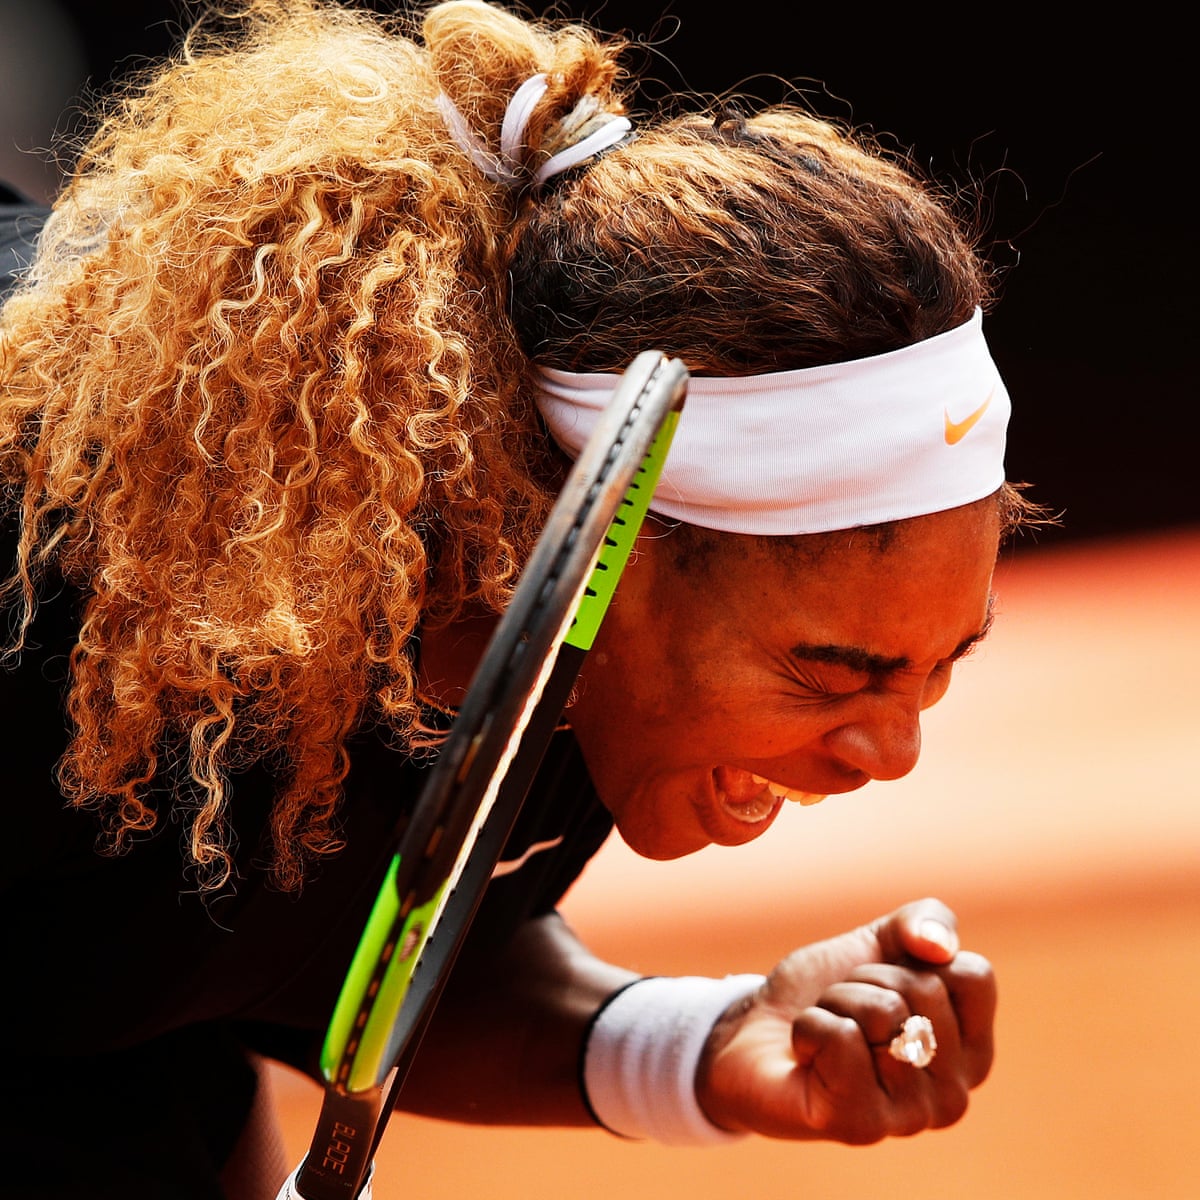 Serena Williams overcomes slow start to make smooth progress in Italian Open  | Serena Williams | The Guardian